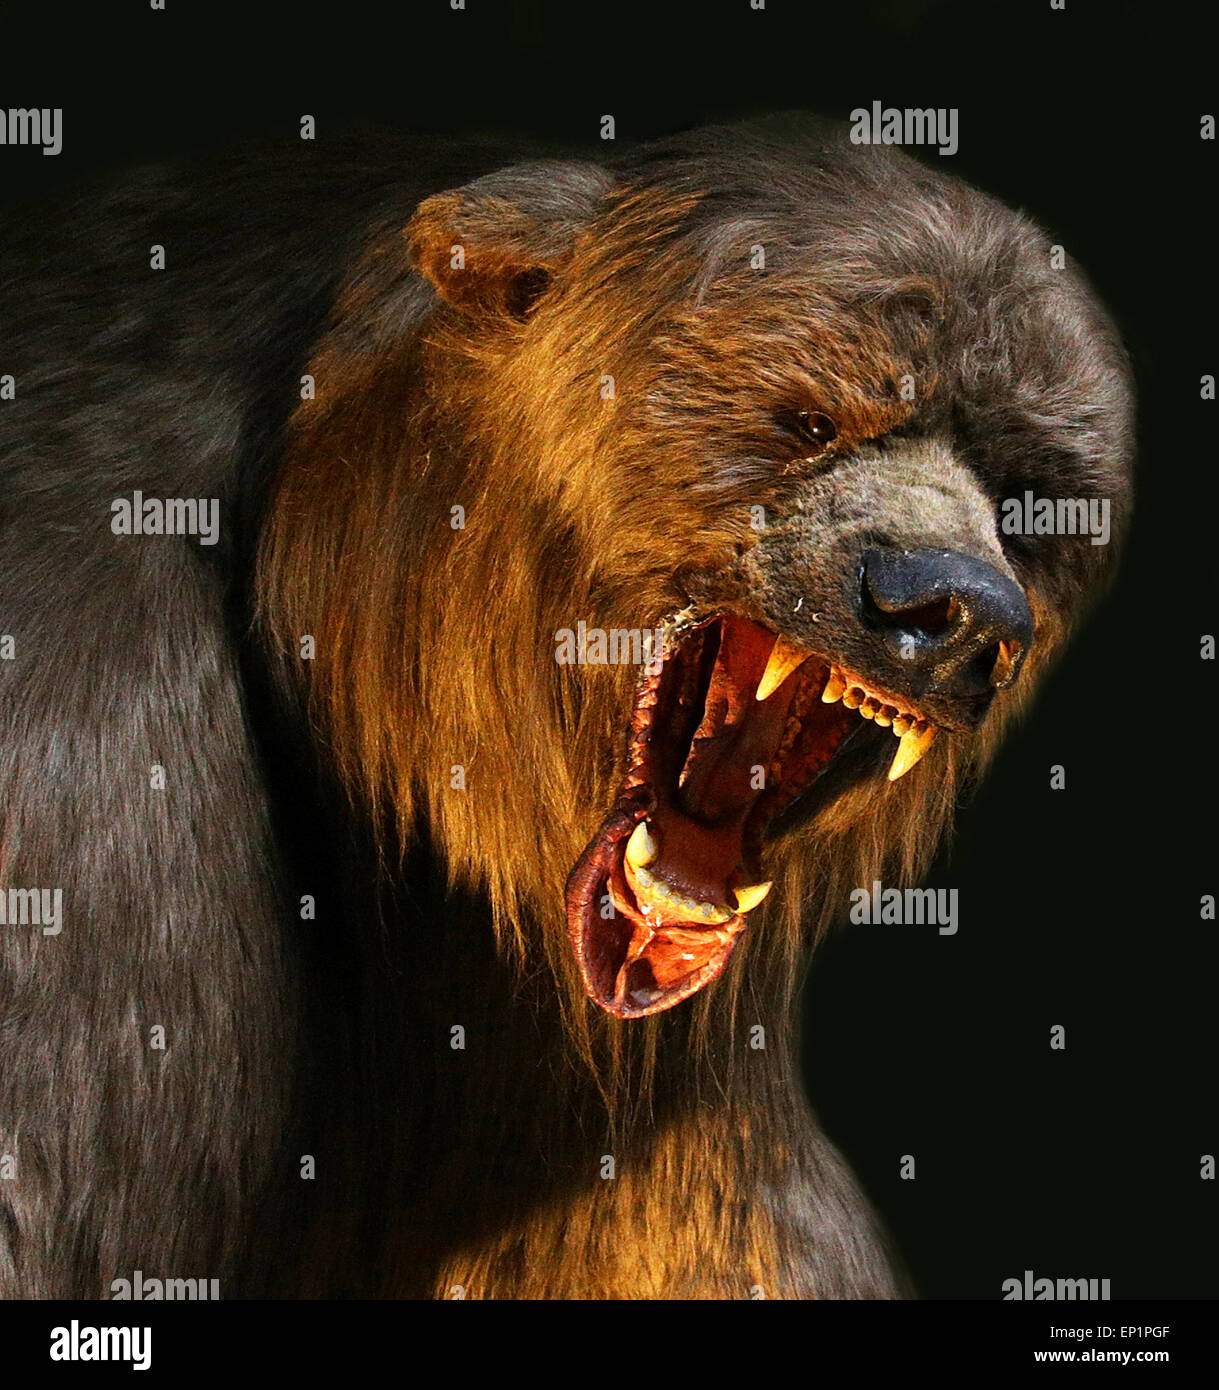 Страшный медведь нападает